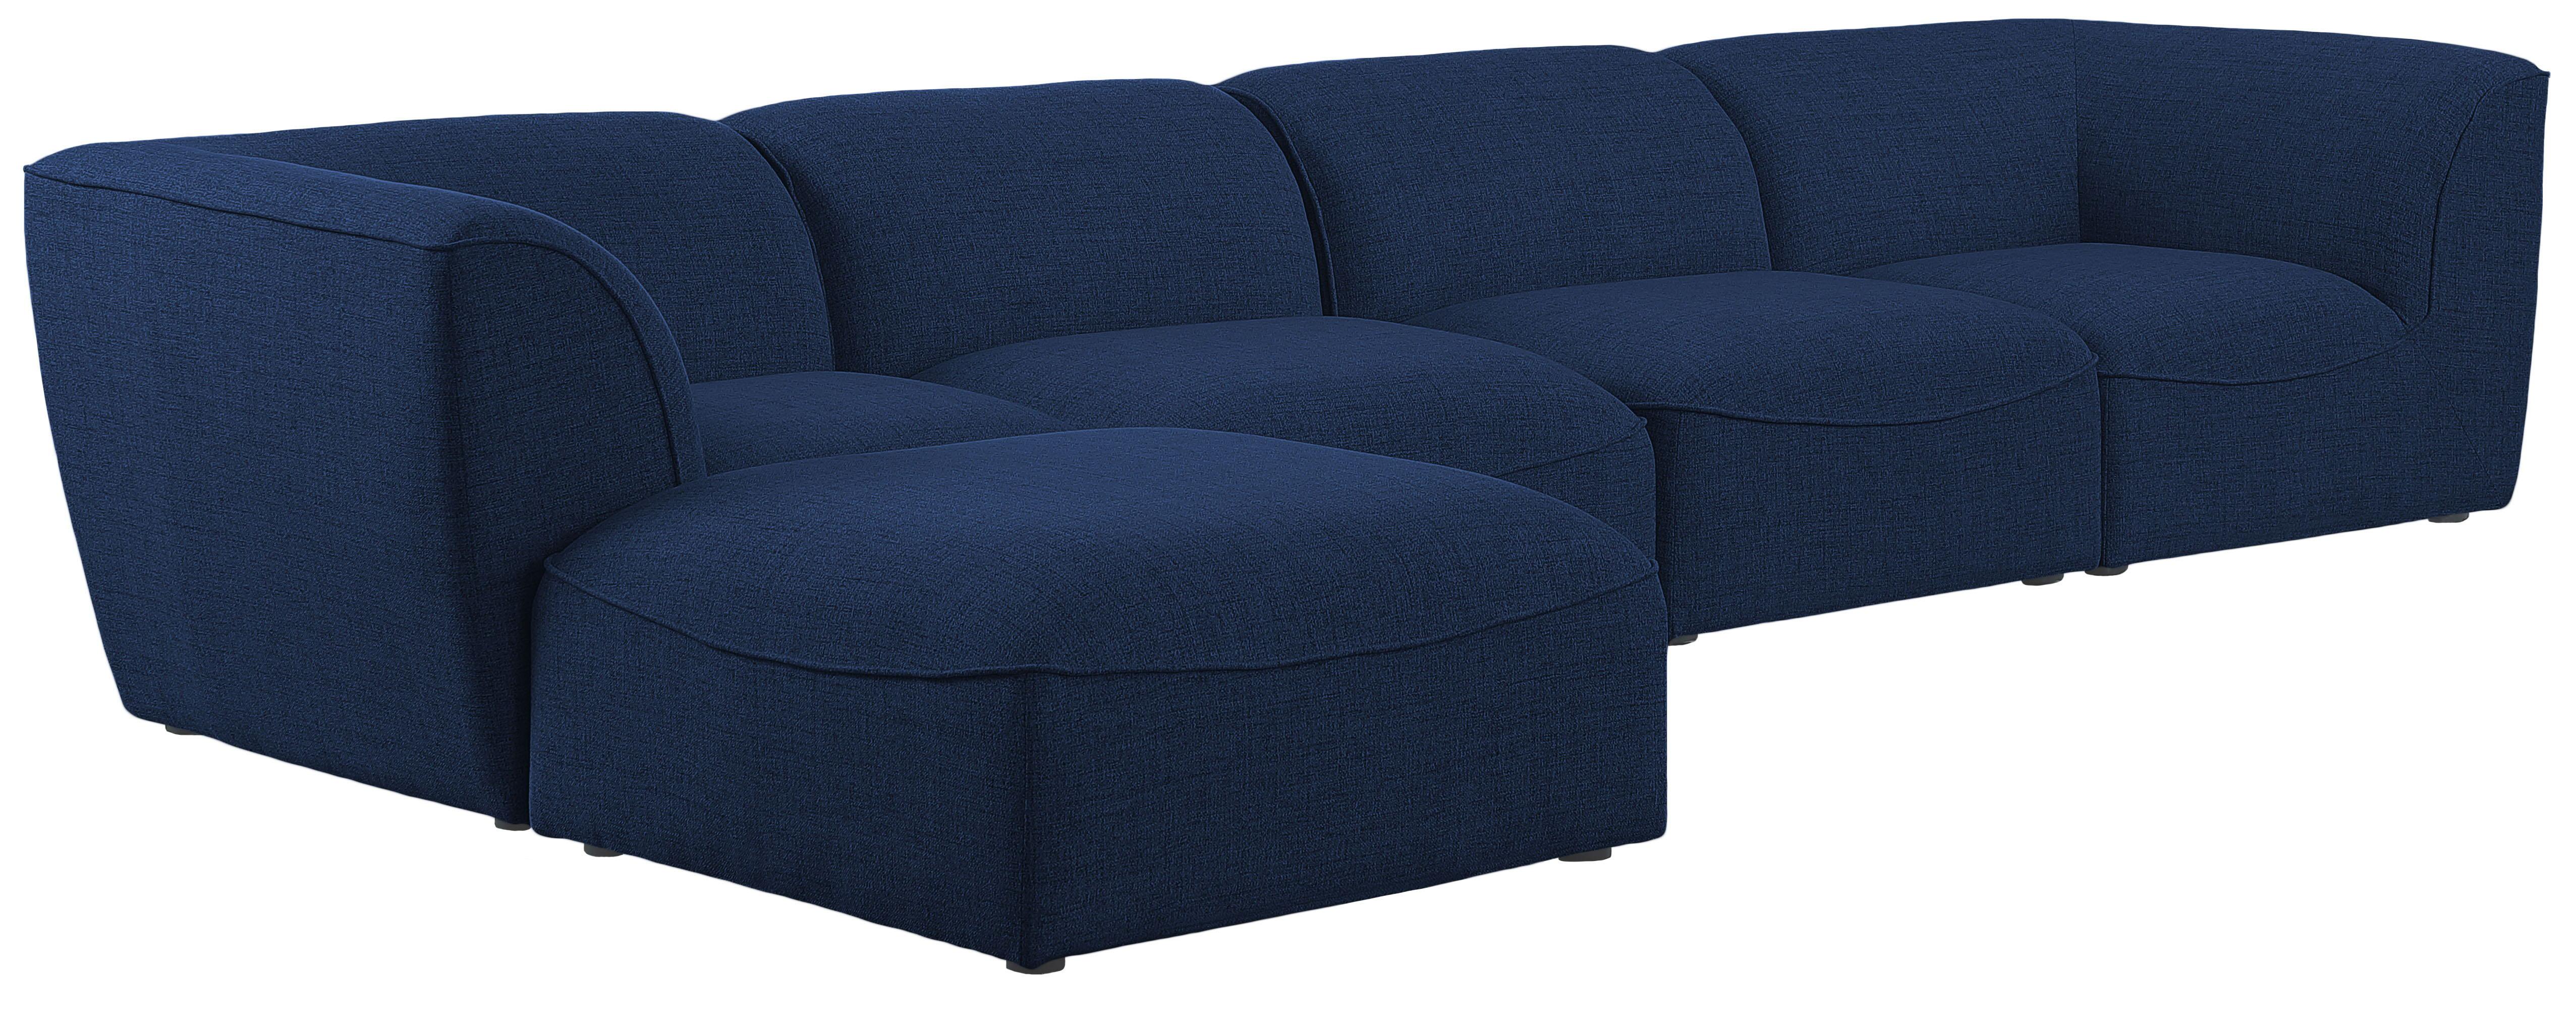 Meridian Furniture - Miramar - Modular Sectional 5 Piece - Navy - Modern & Contemporary - 5th Avenue Furniture